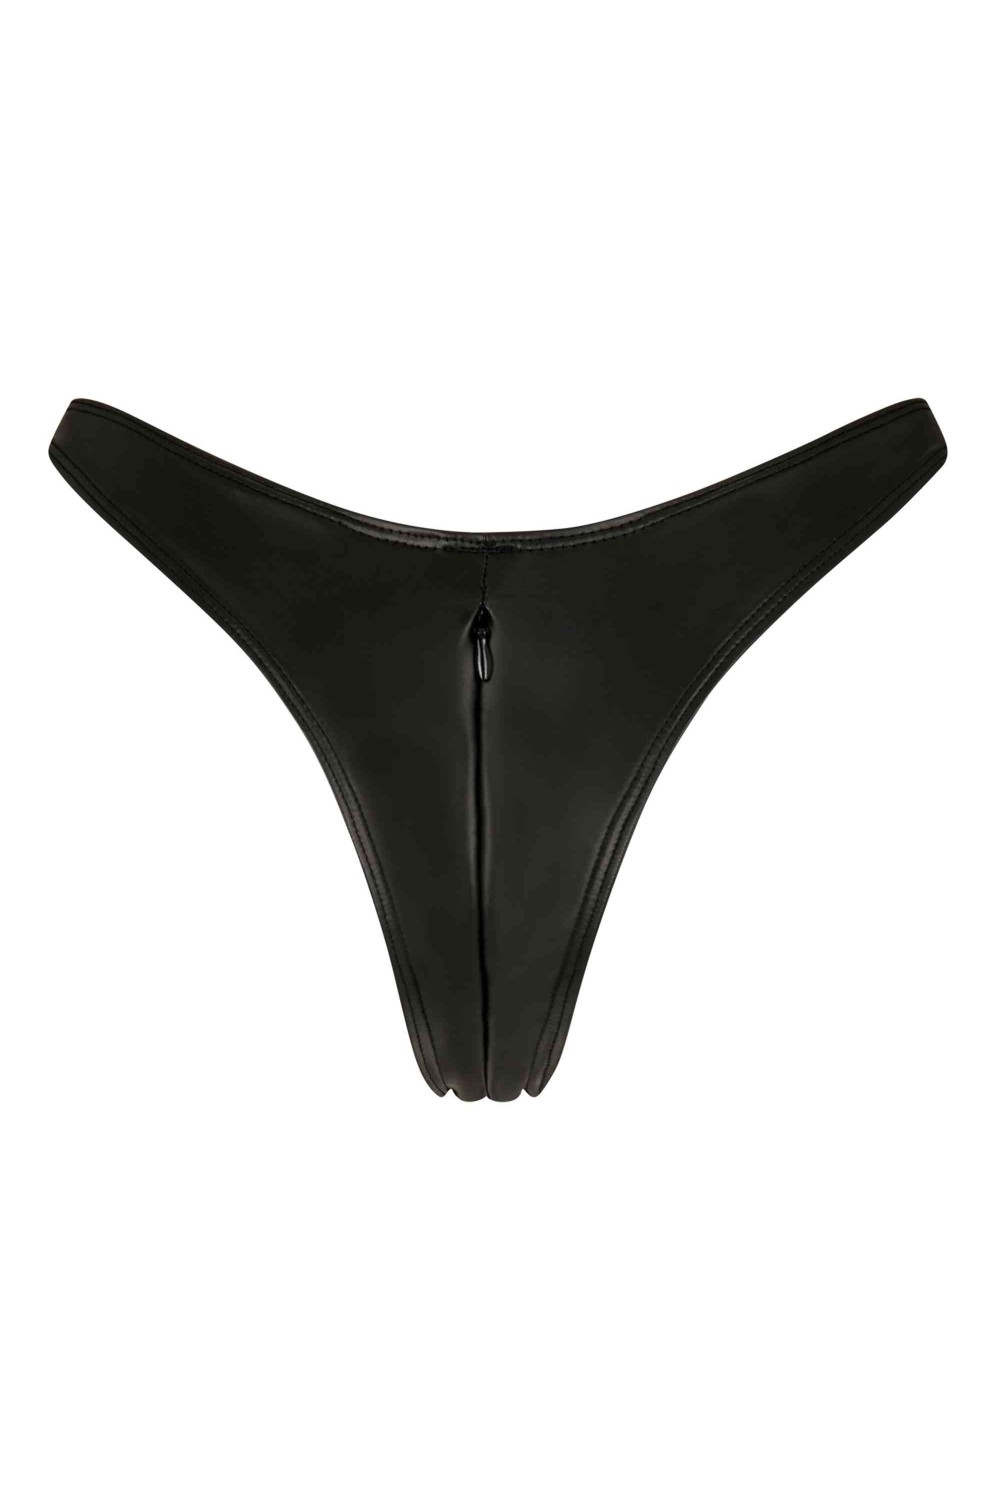 Women Wet Look Faux Leather Thongs Sexy Underwear Briefs Panties